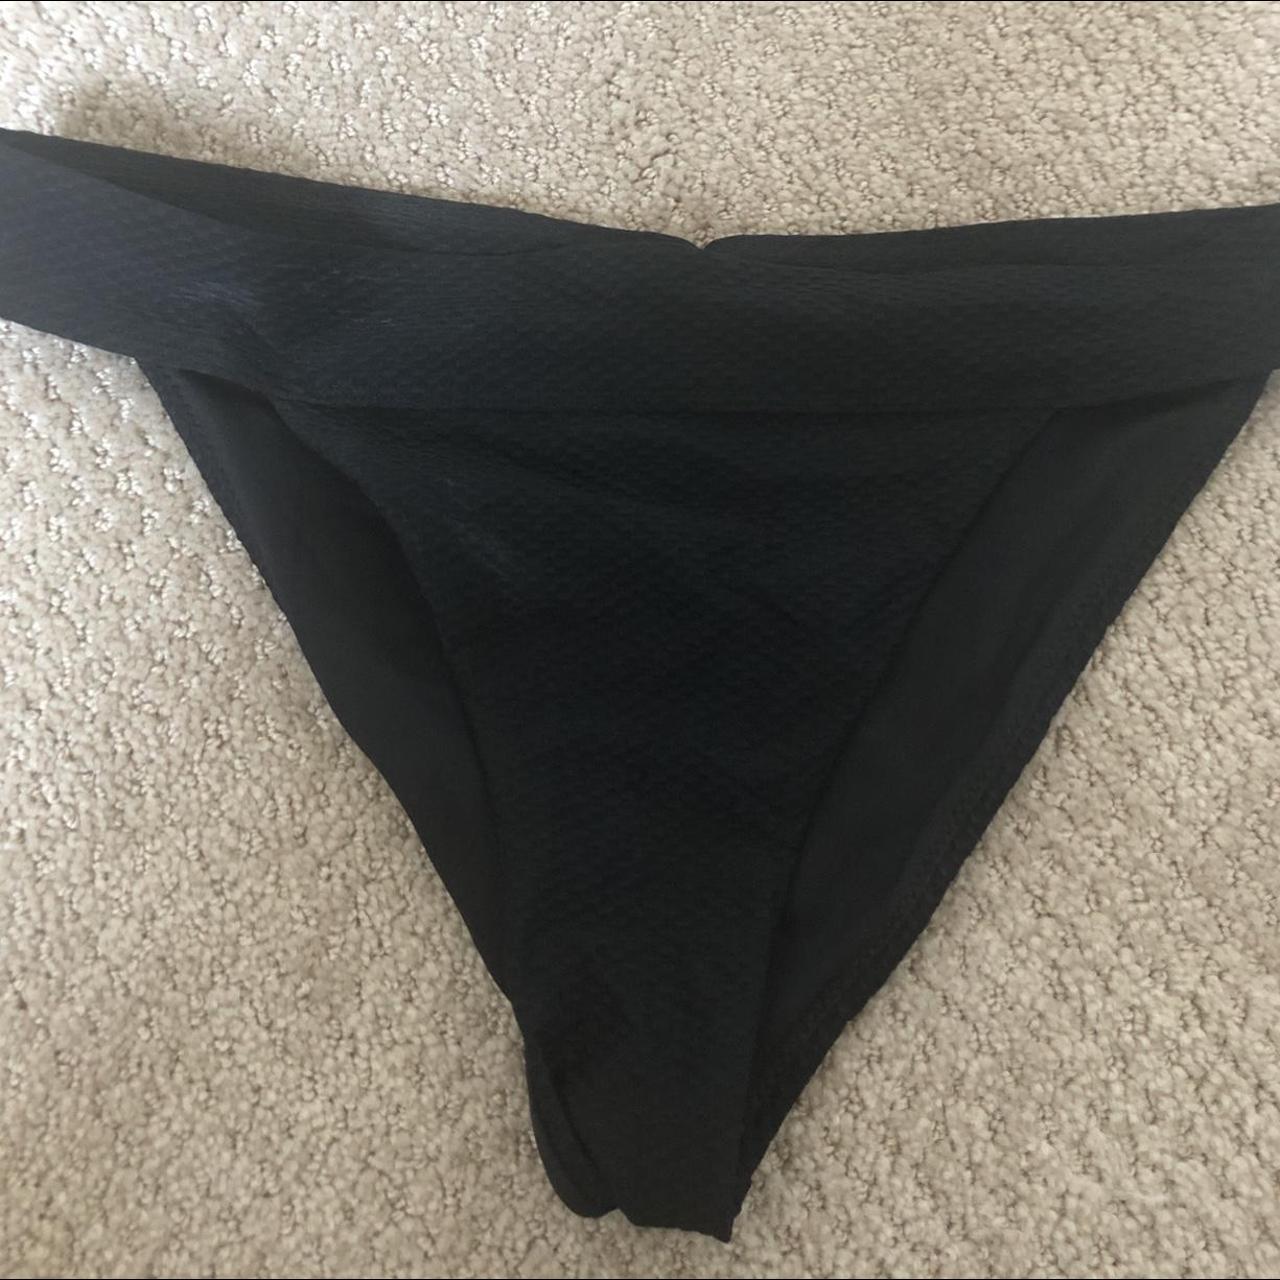 Product Image 3 - Adorable black triangle bikini set